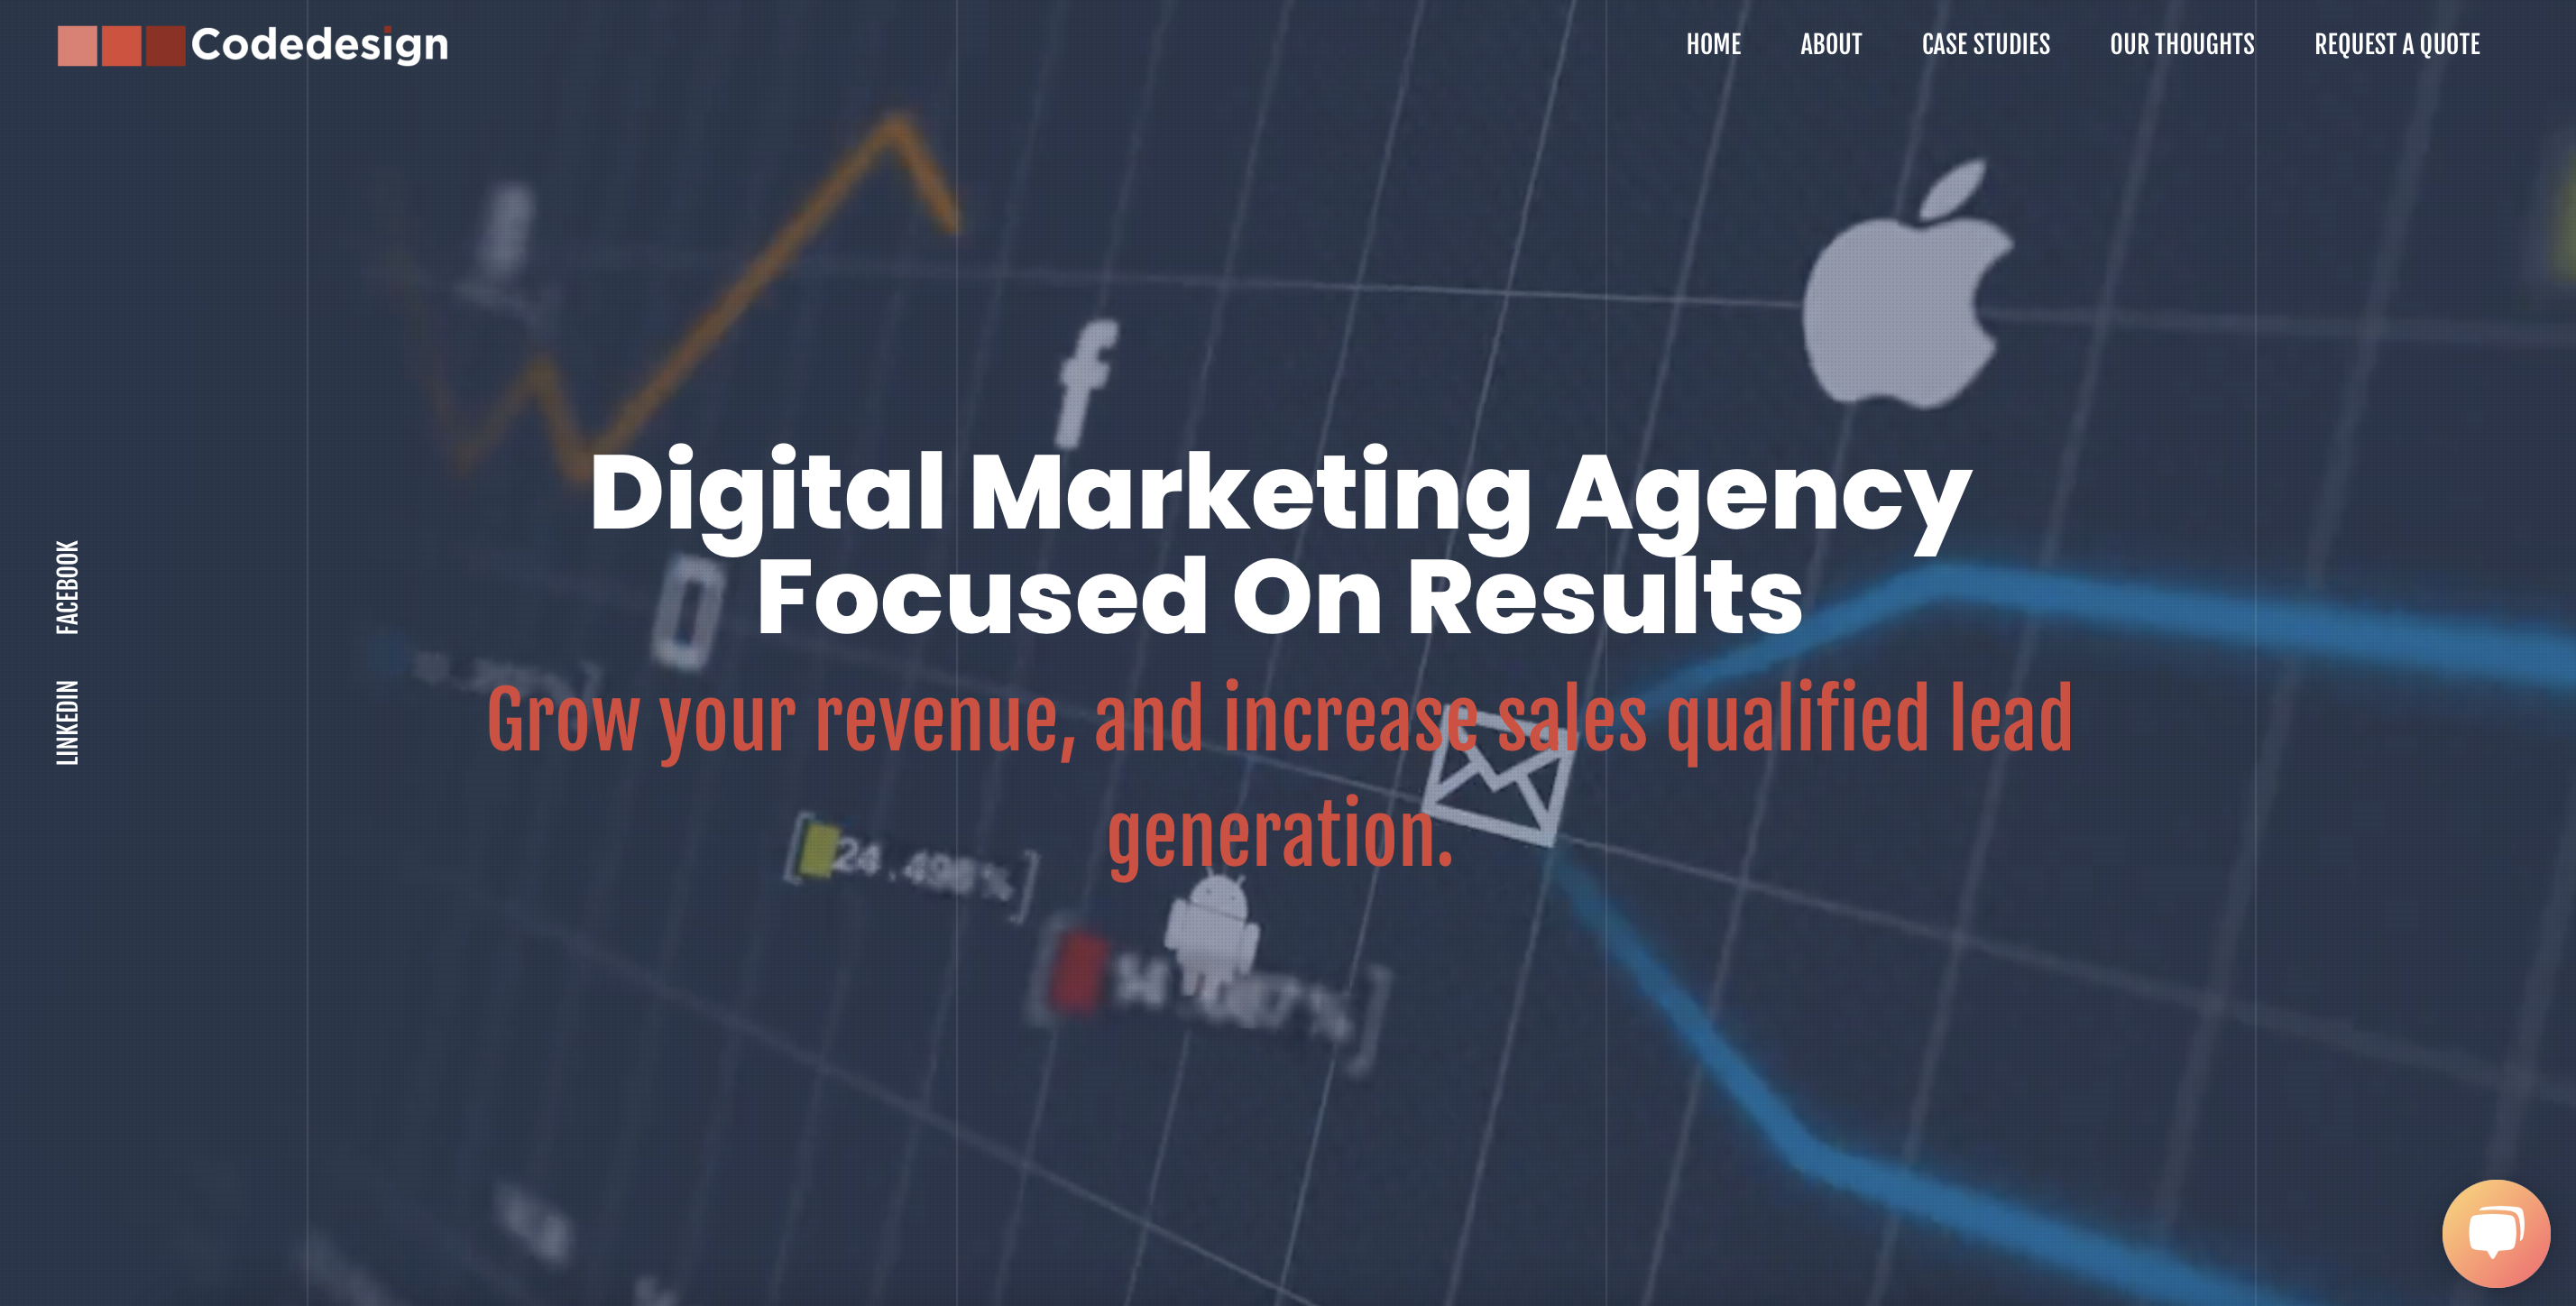 CodeDesign - Leading Digital Marketing Agency